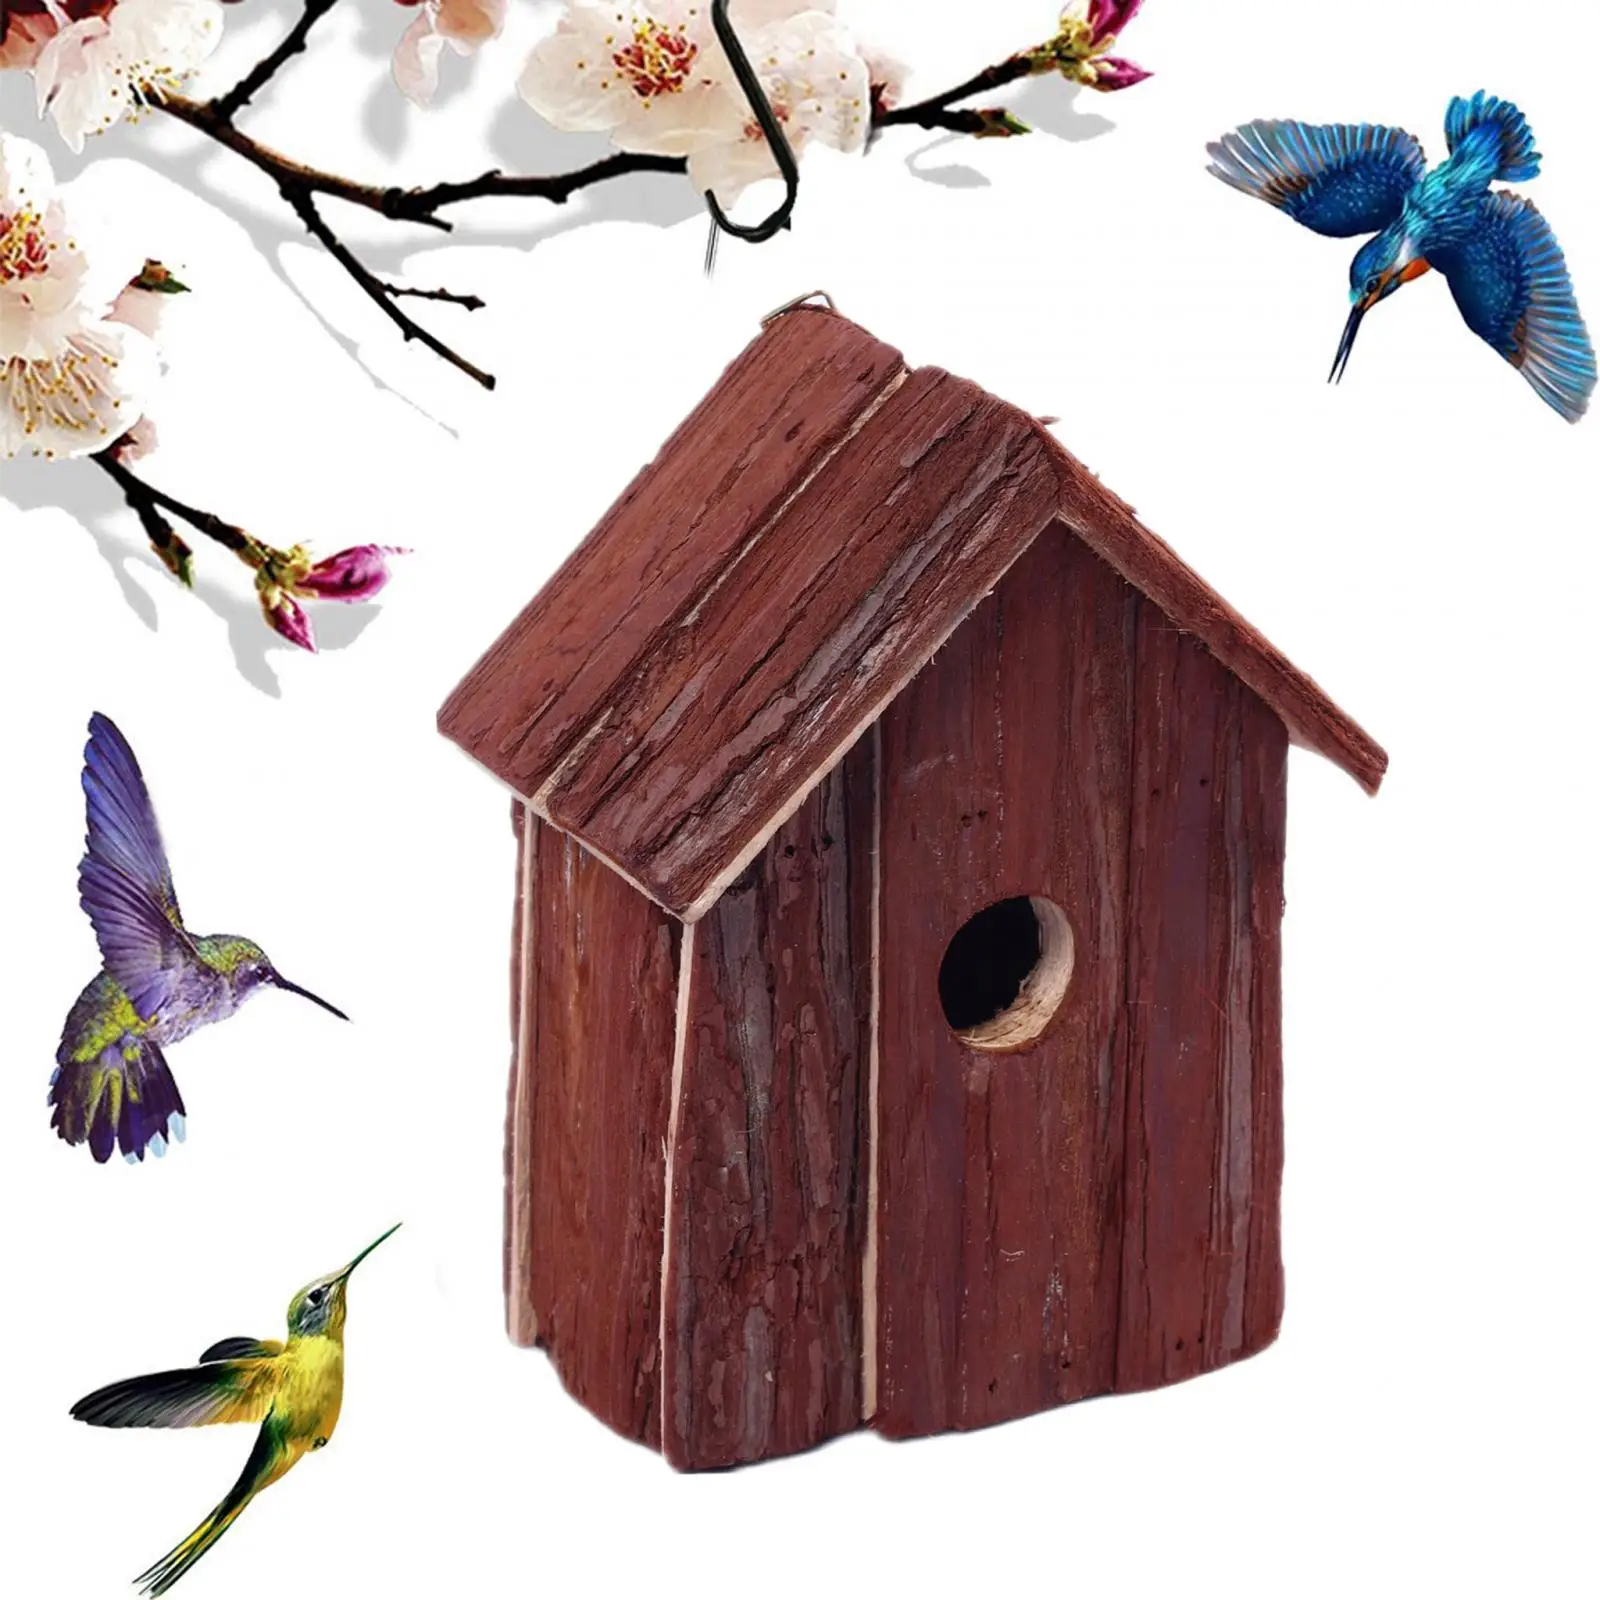 Hummingbird Houses Durable Sturdy Creative Wood Birds House Bird House Room for Yard Backyard Outside Garden Hummingbirds